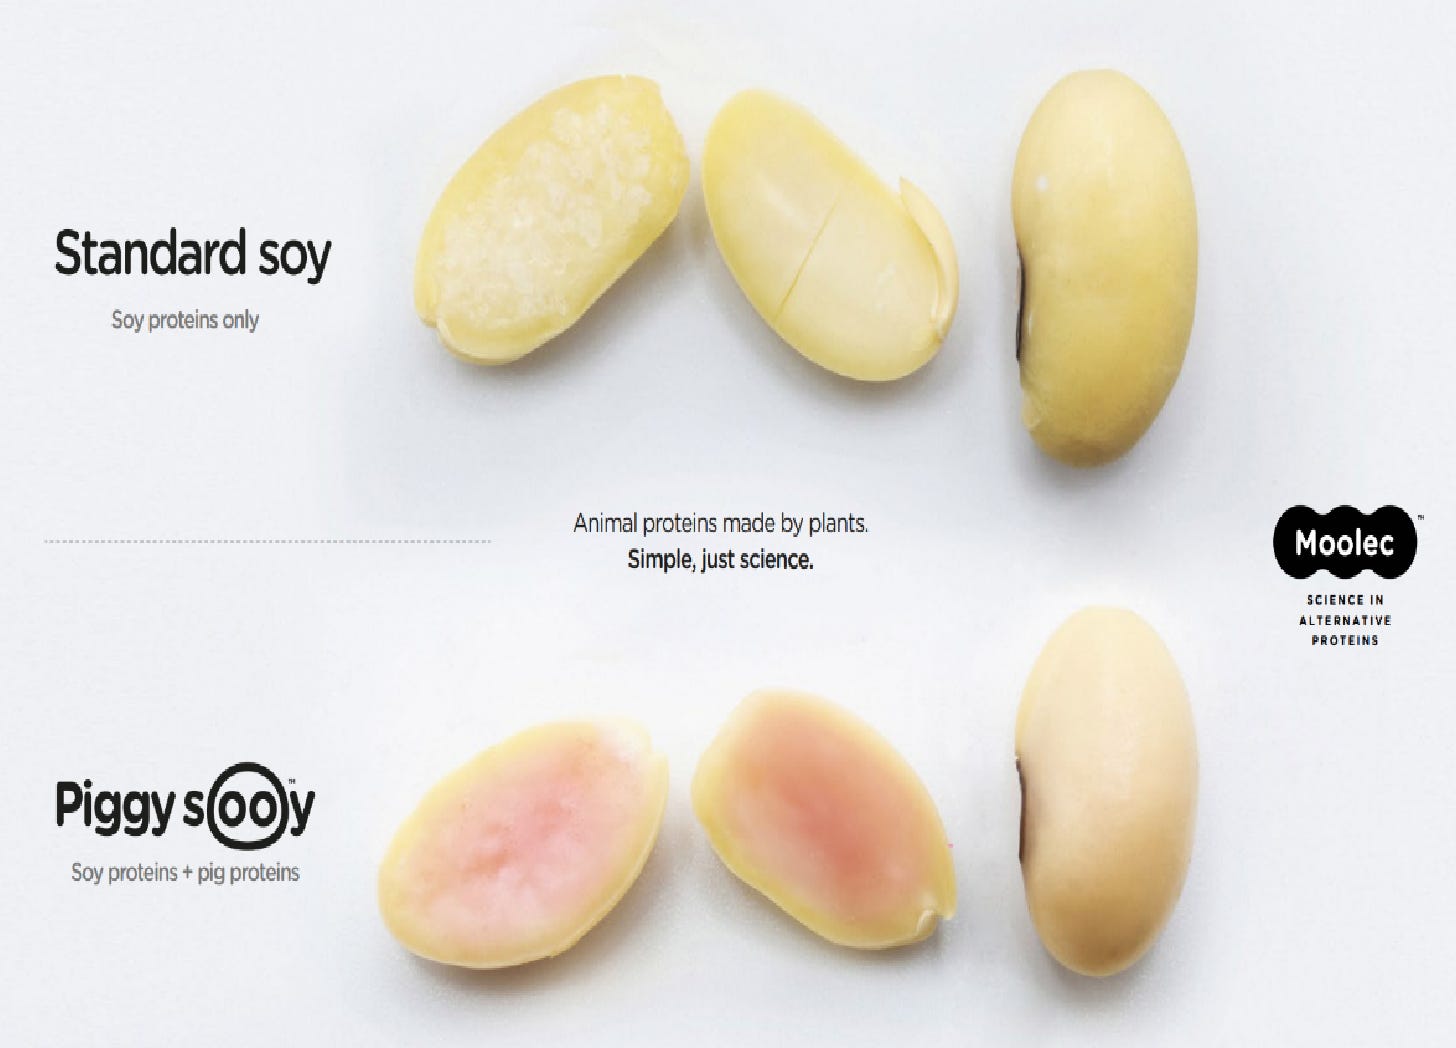 Comparison of a standard soy bean cut open vs a Piggy Sooy bean cut open, revealing the fleshy interior.